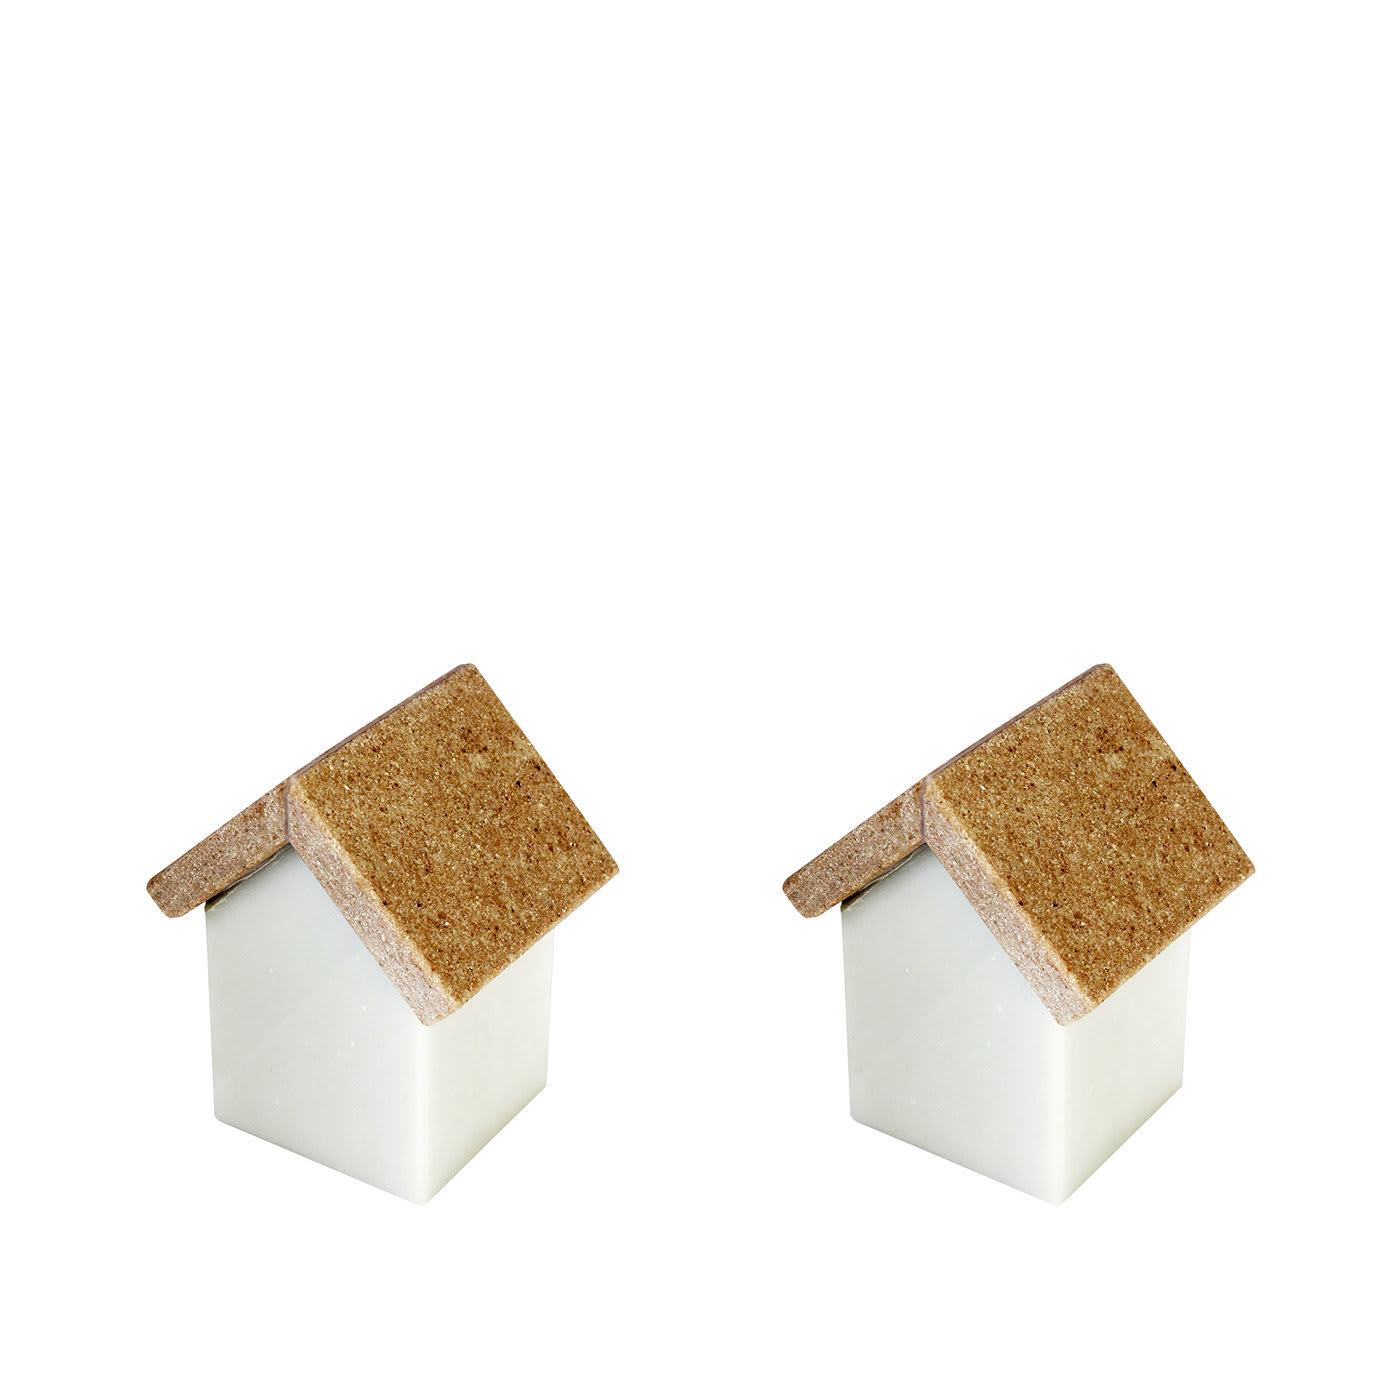 Set of 2 Little House Sculptures in Carrara and Portogallo Marbles by Paola Giubbani - Carrara Home Design